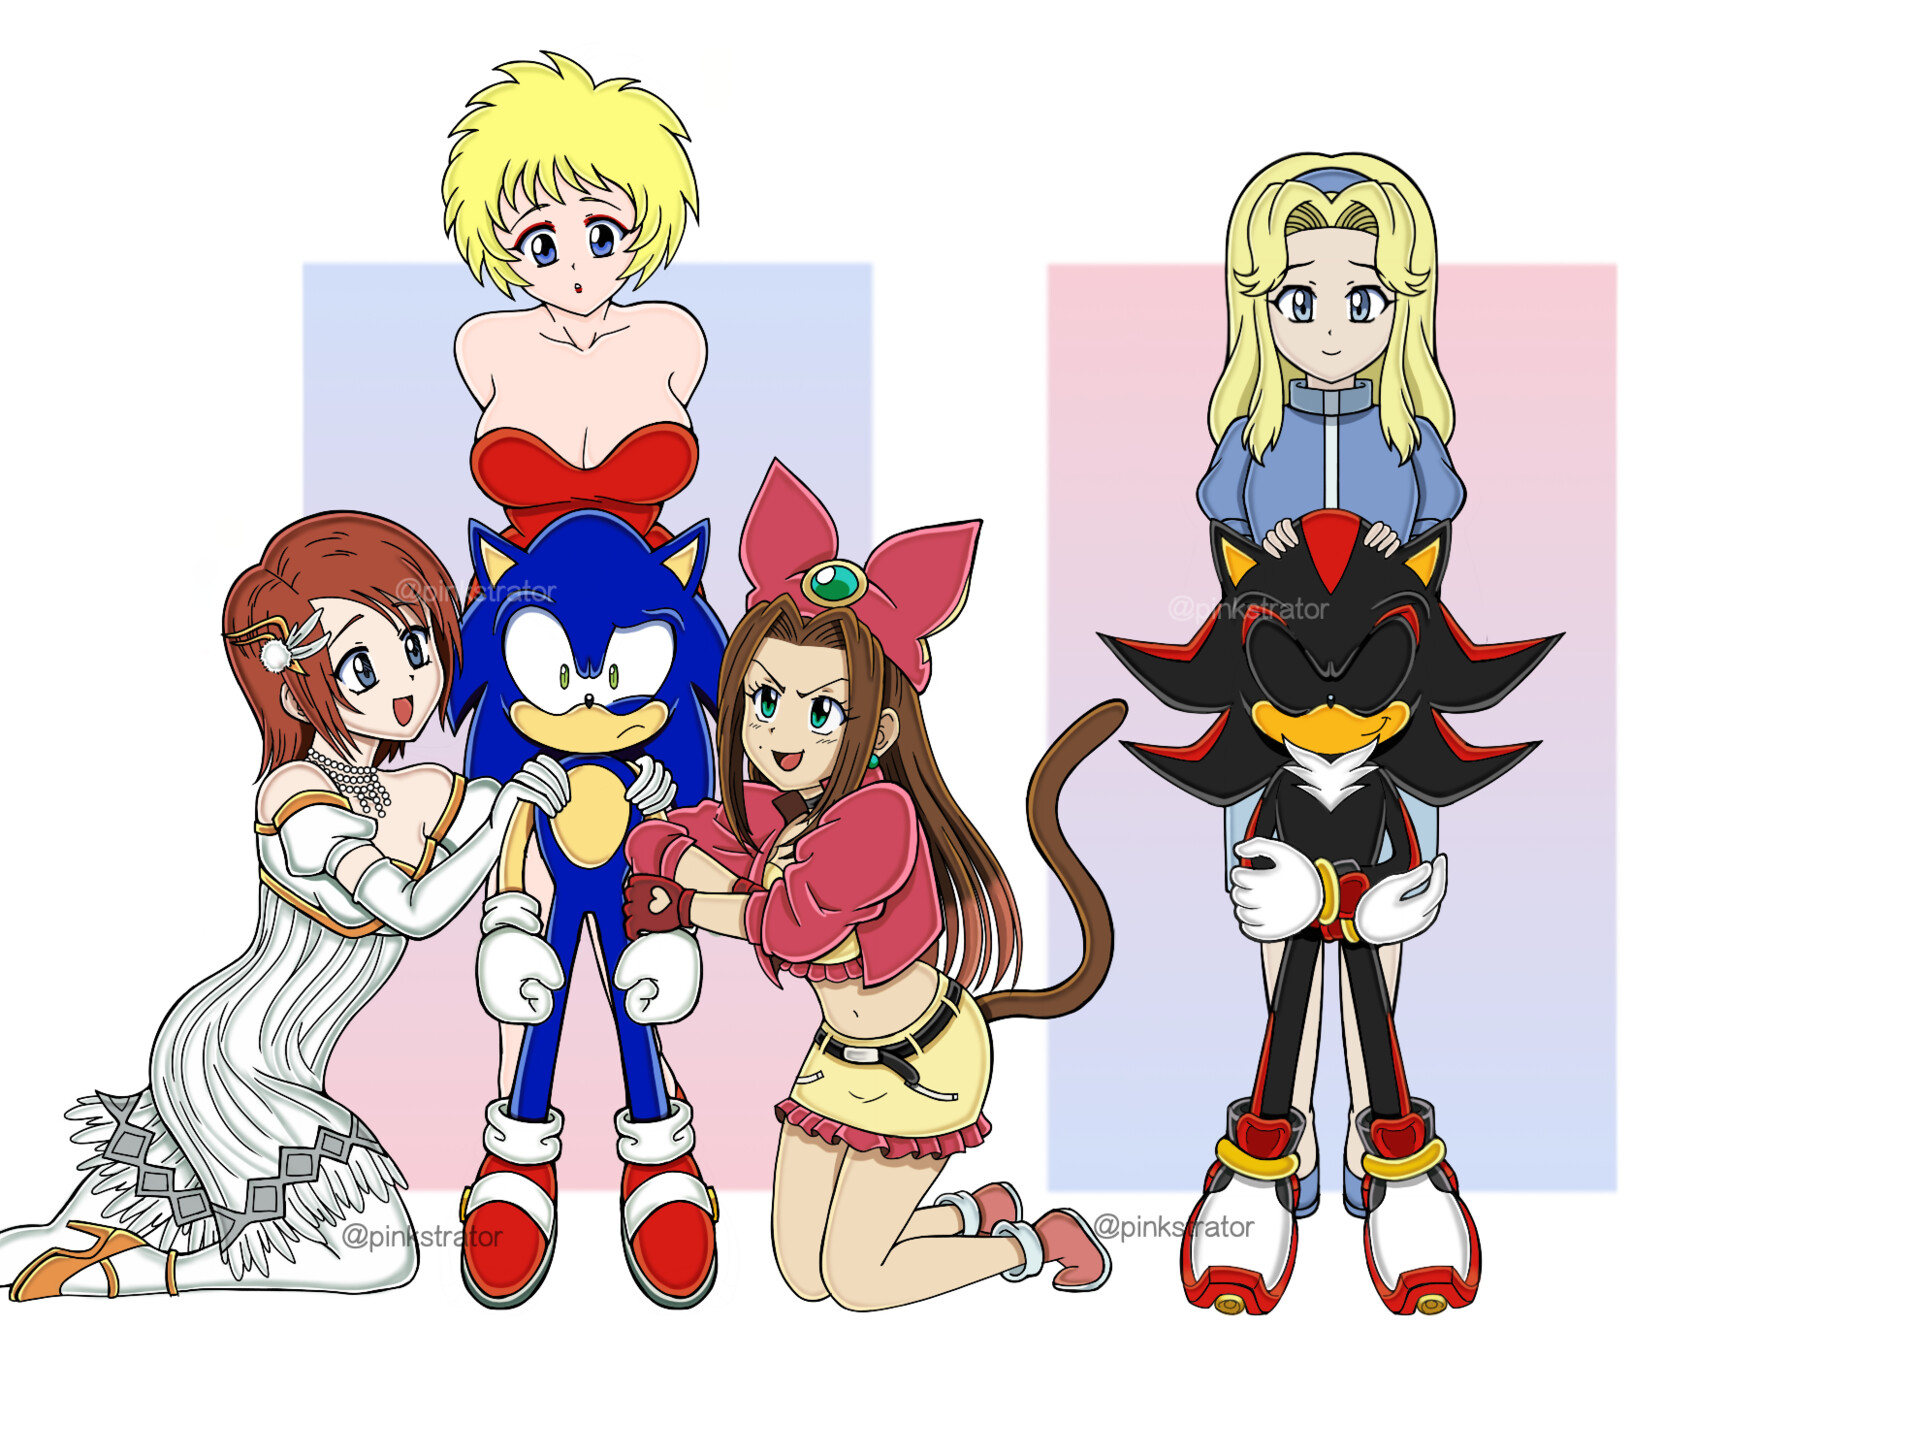 SONIC (Sonic X) VS SHADOW (Sonic X)